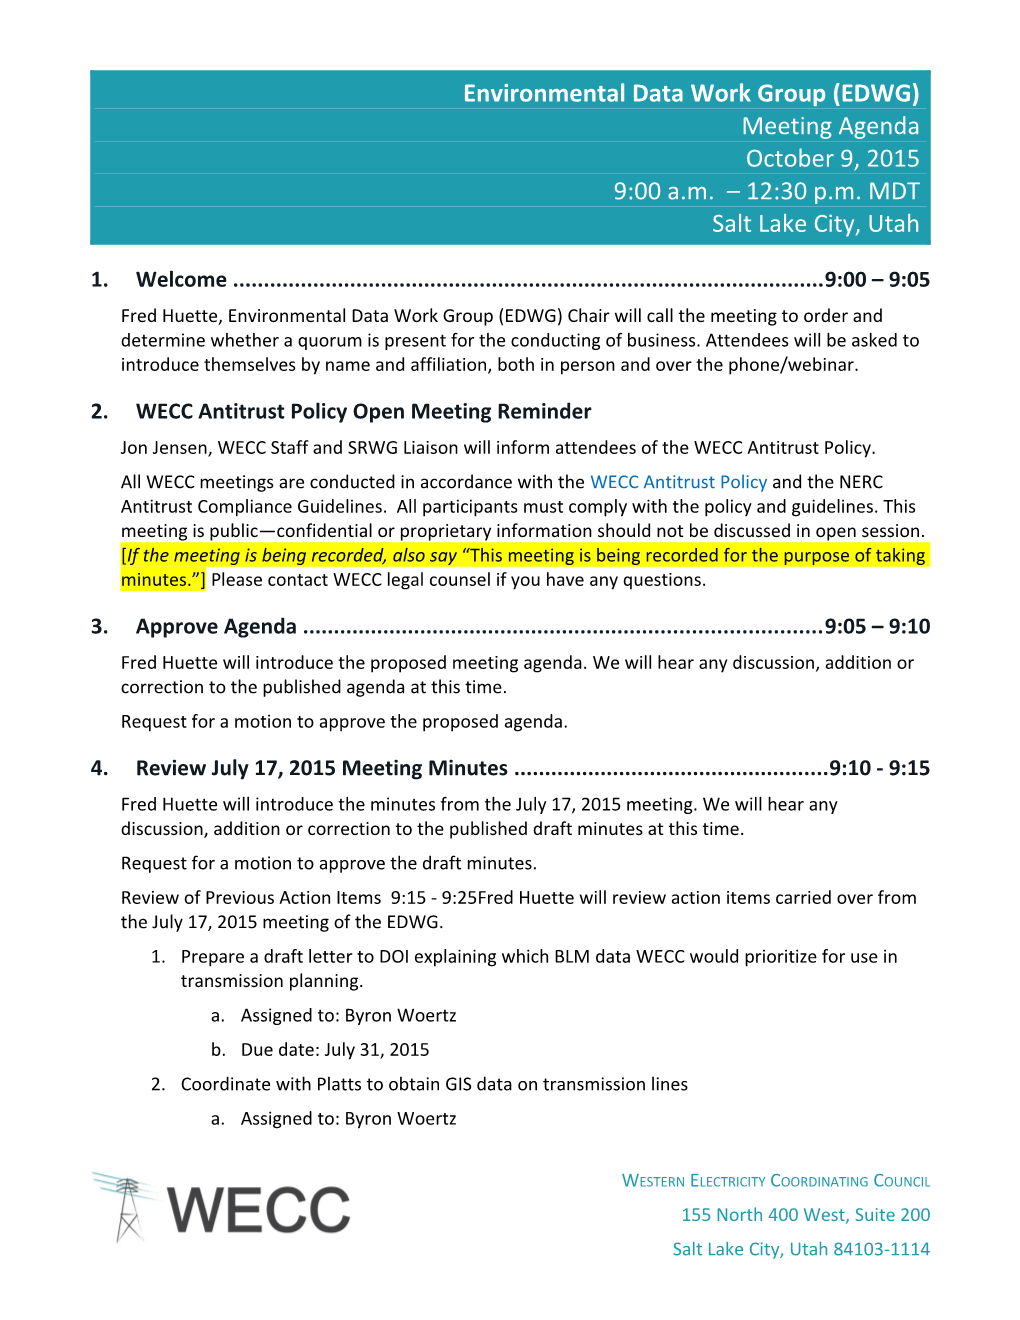 EDWG Meeting Agenda 10-9-10